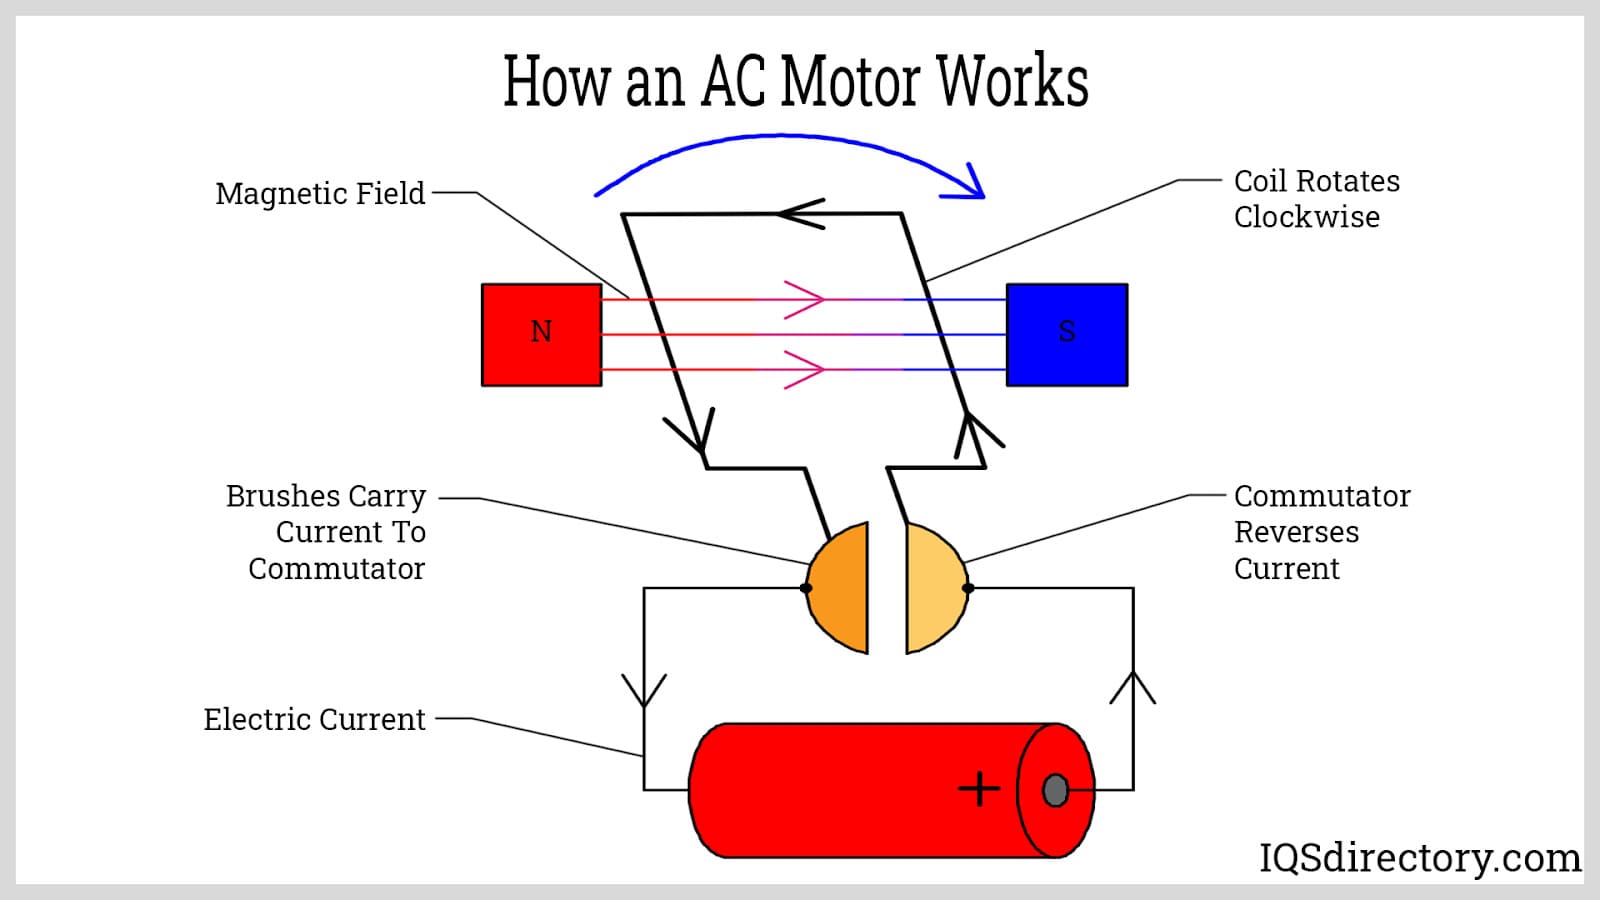 How an AC Motor Works